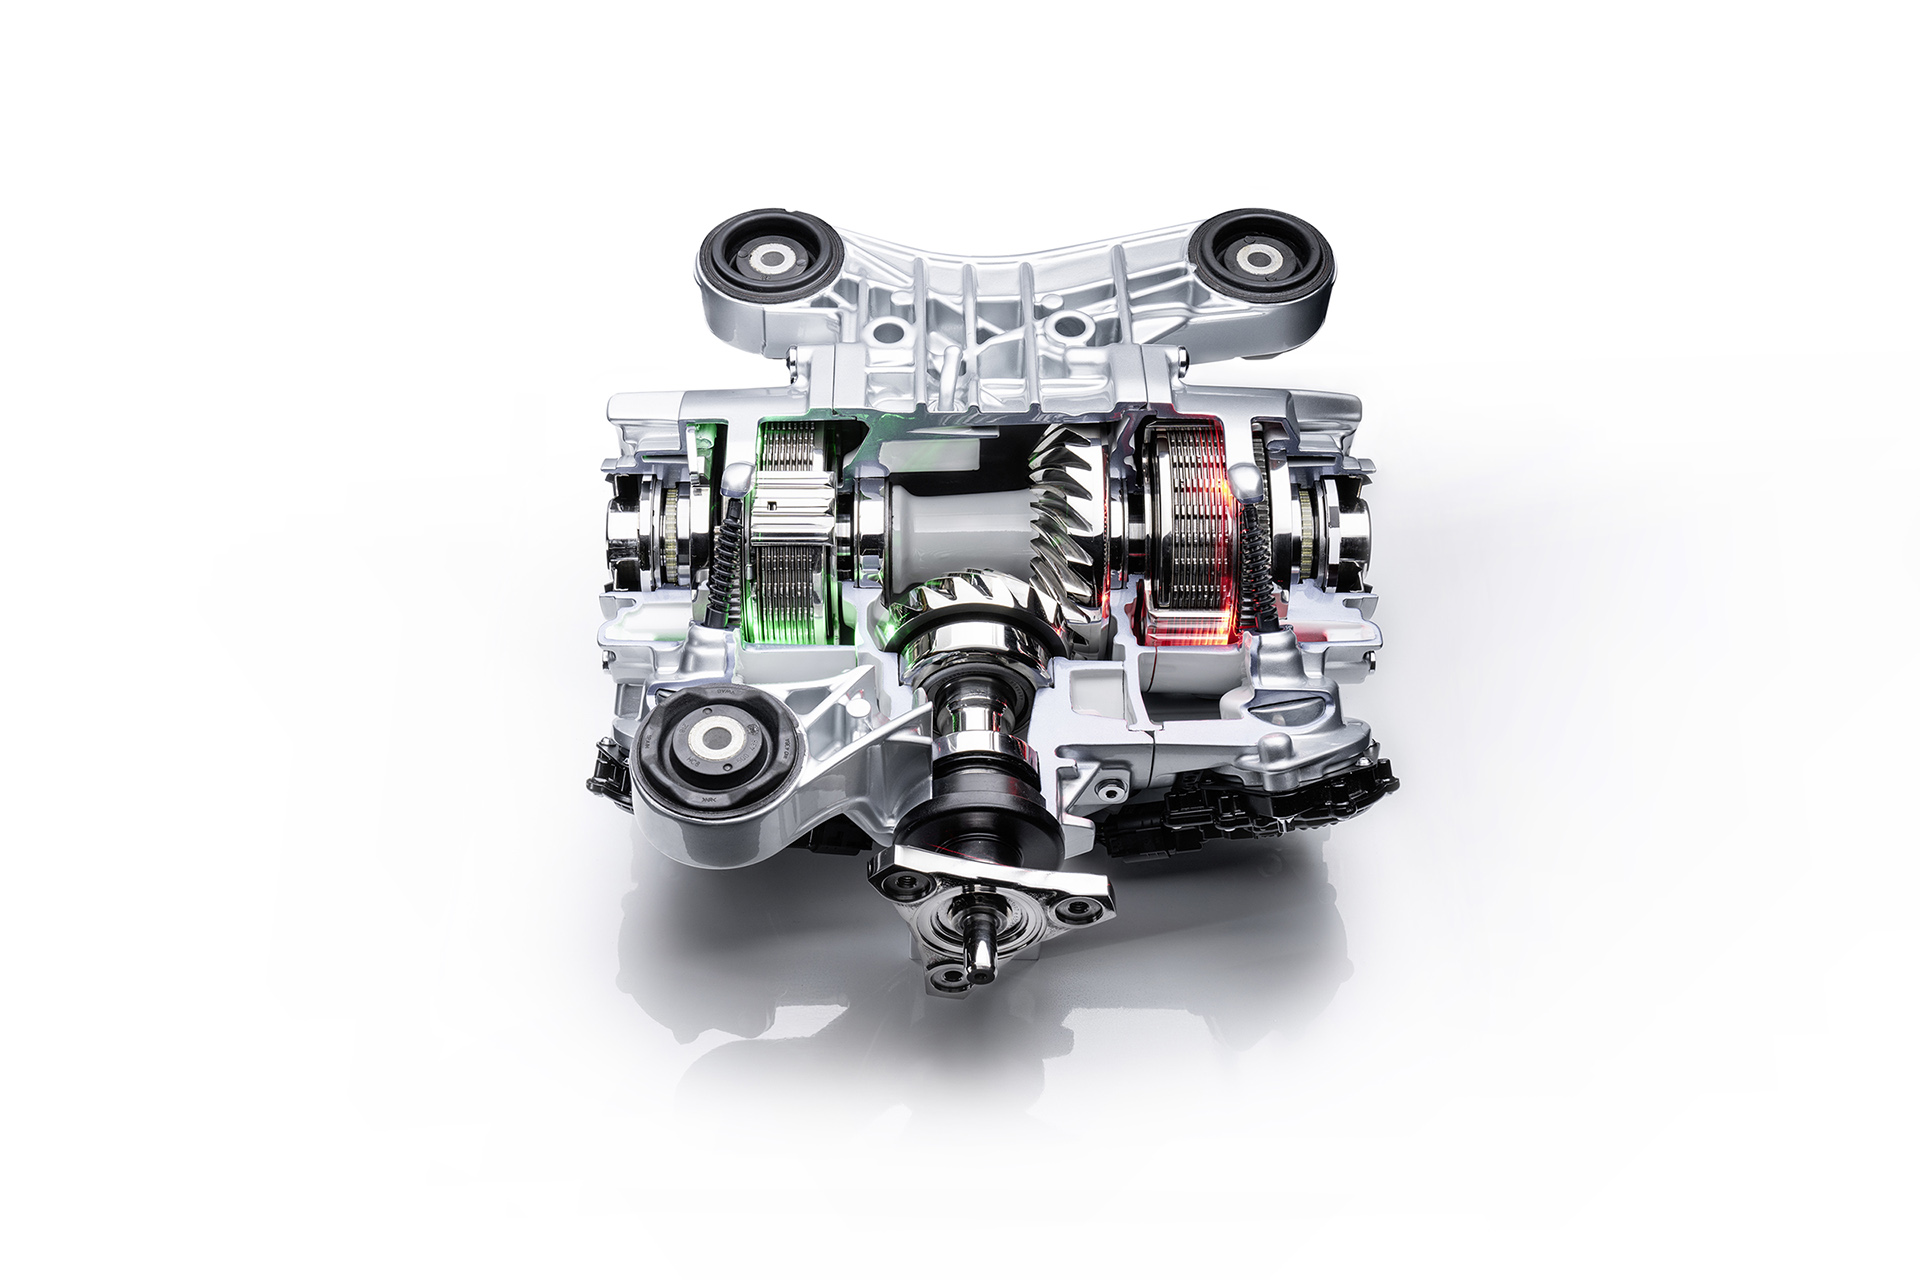 NEO AUDI RS 3 TORQUE SPLITTER 11 Πώς λειτουργεί το RS Torque Splitter του νέου Audi RS 3